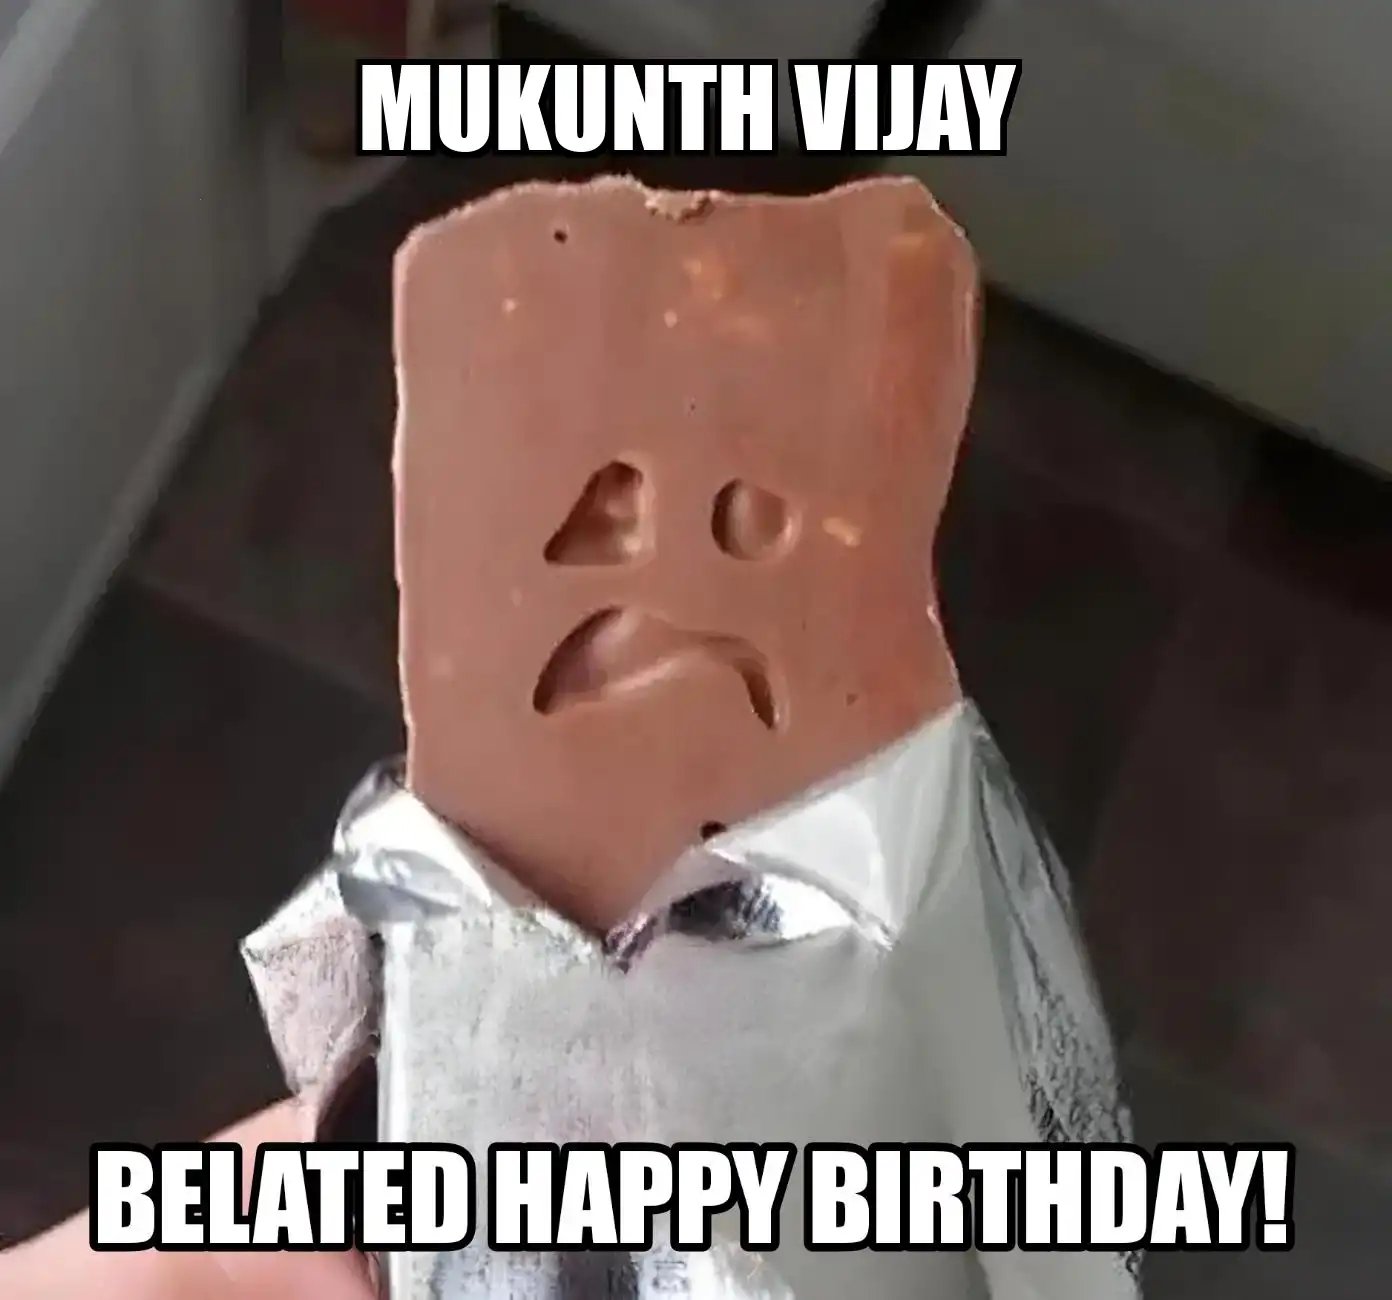 Happy Birthday Mukunth vijay Belated Happy Birthday Meme